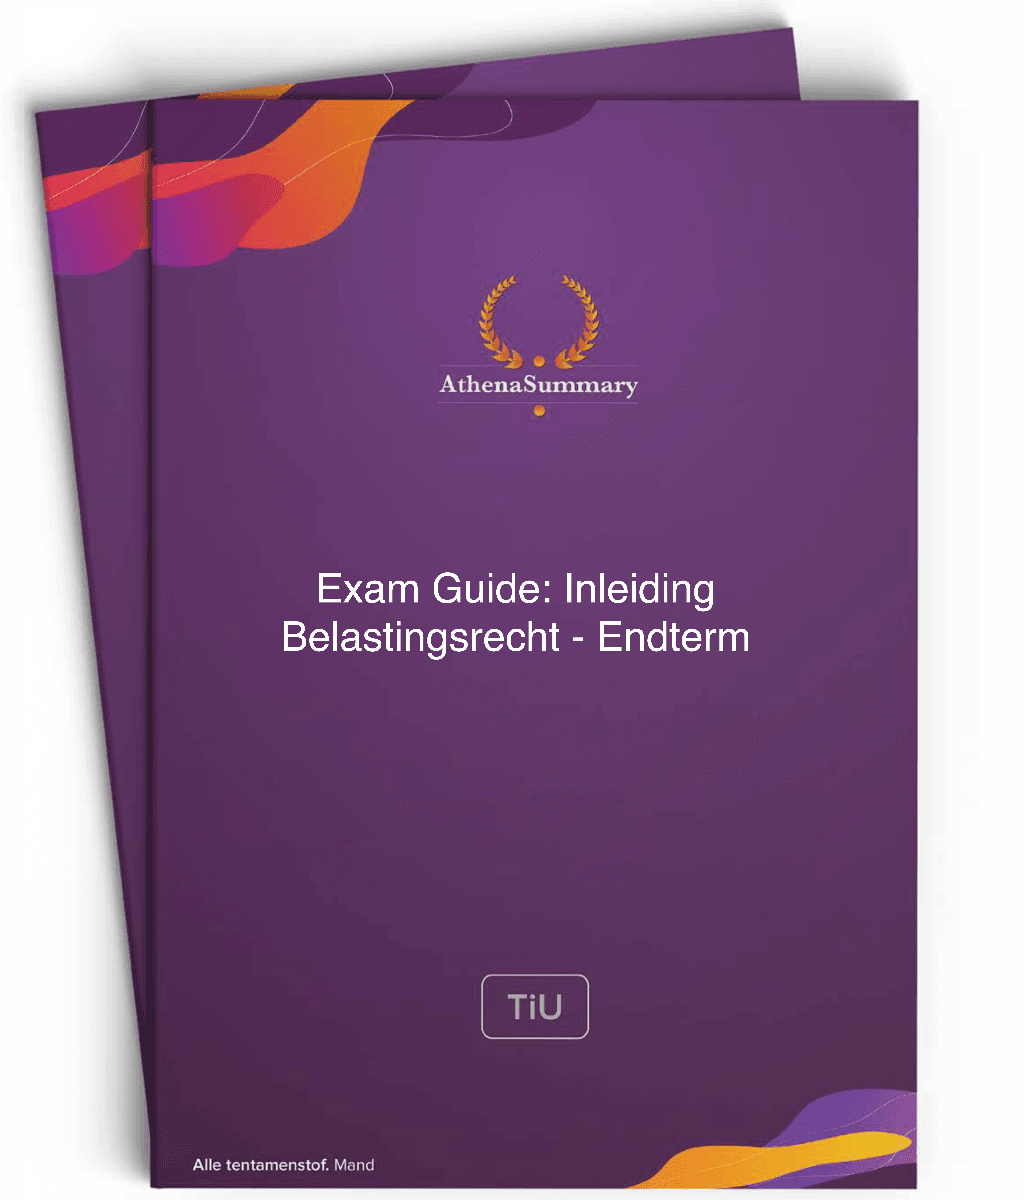 Exam Guide Inleiding Belastingsrecht - Endterm